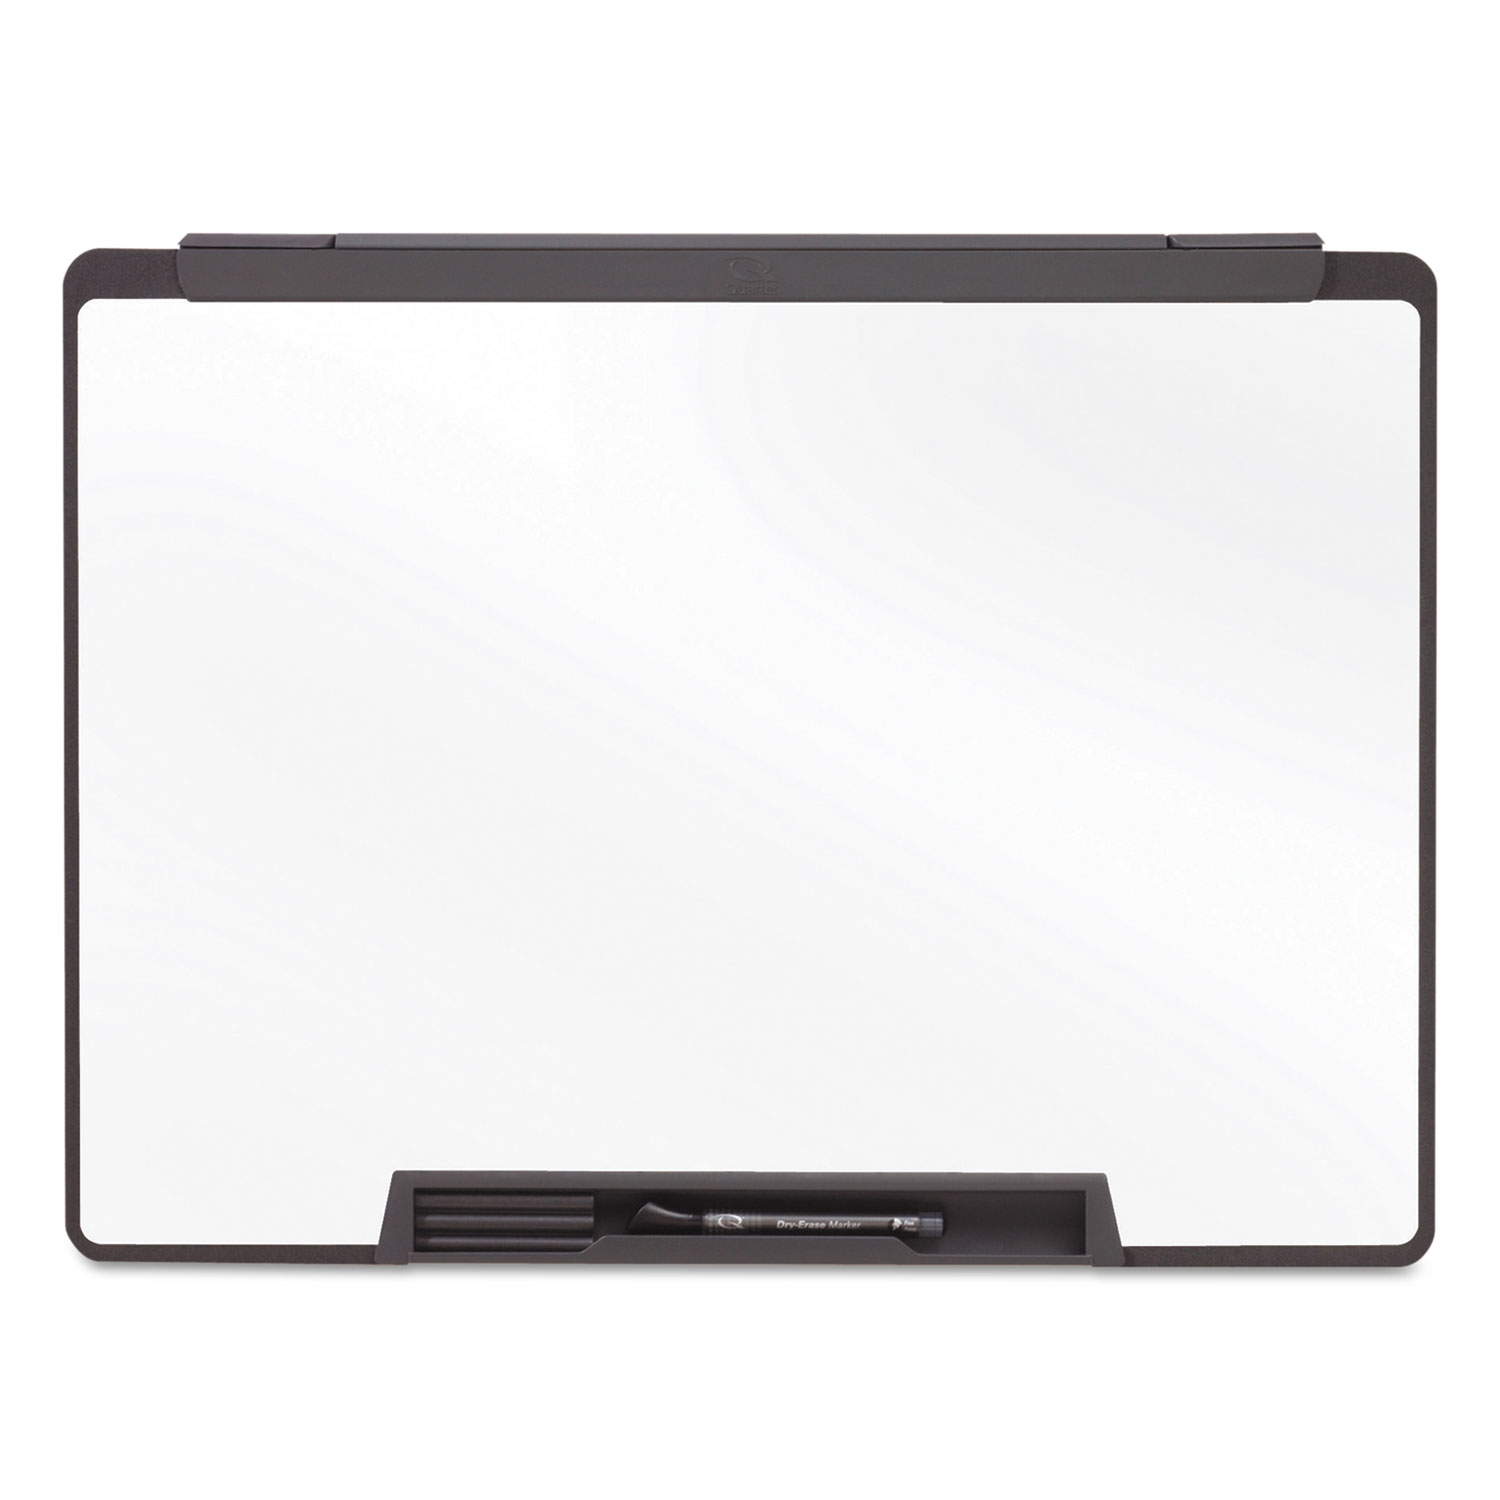  Quartet MMP75 Motion Portable Dry Erase Board, 36 x 24, White, Black Frame (QRTMMP75) 